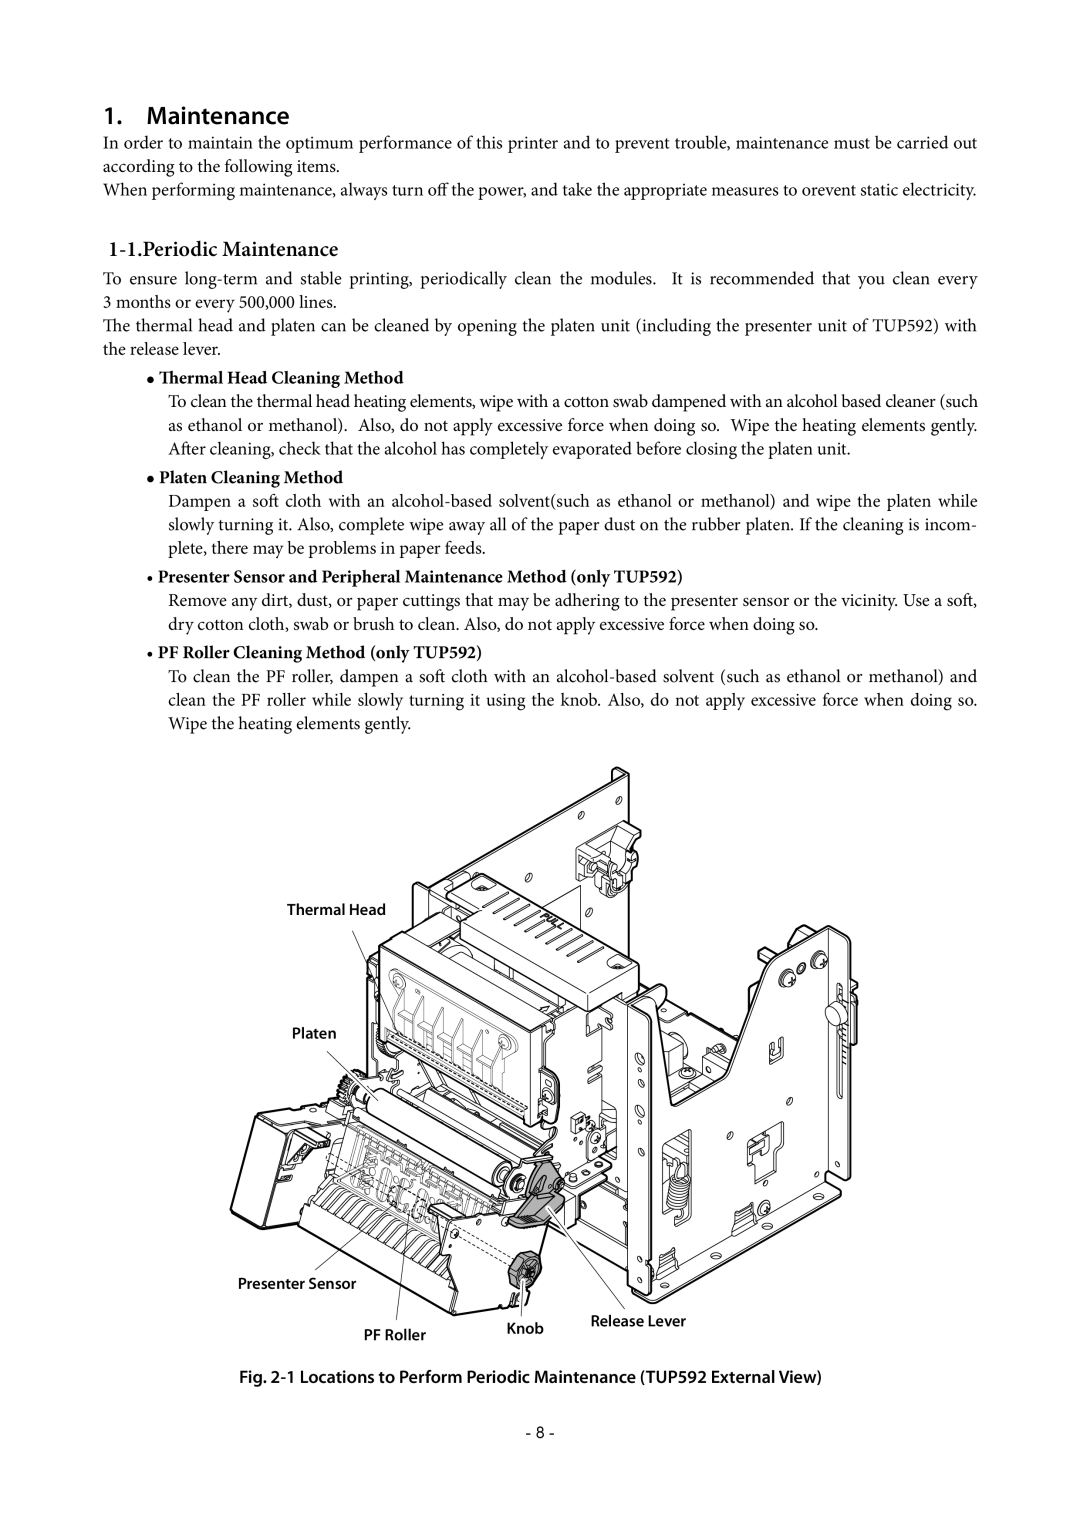 Star Micronics TUP500 technical manual Periodic Maintenance 